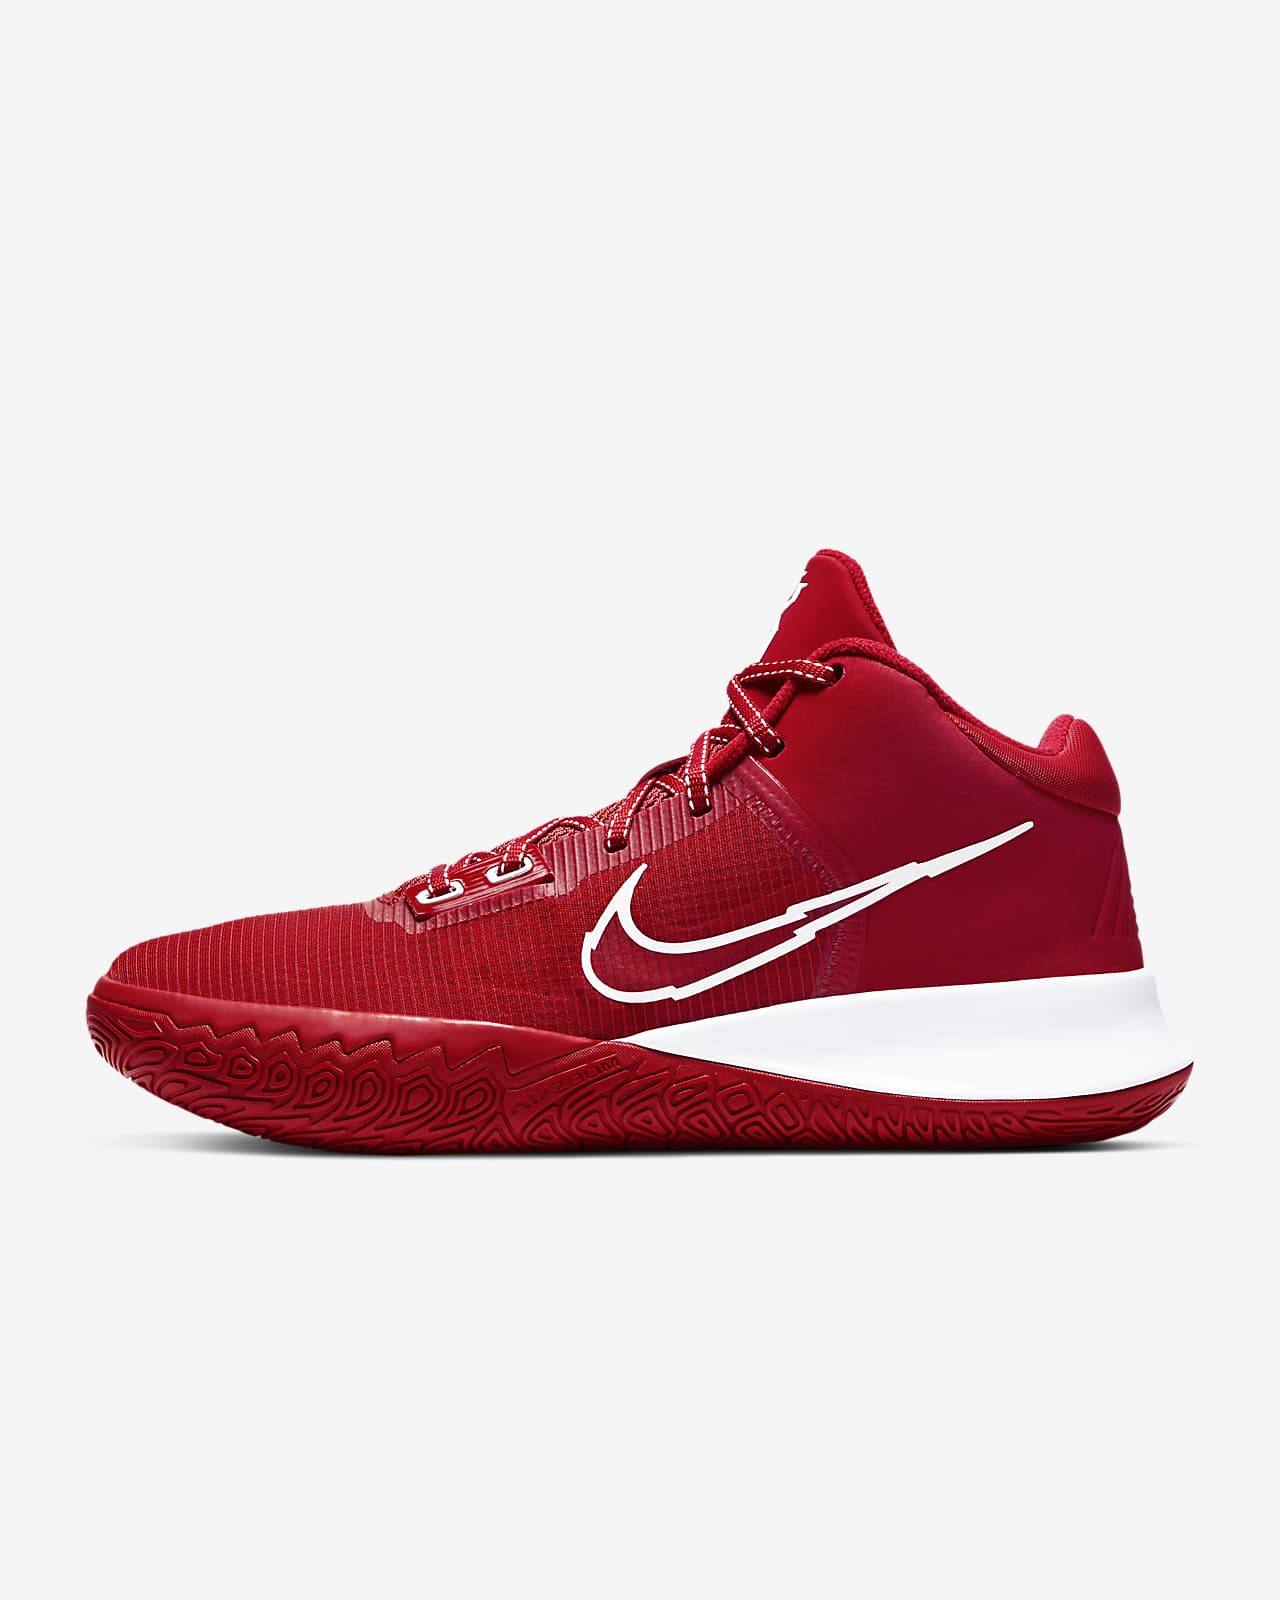 Kyrie Flytrap 4 Basketball Shoe. Nike.com